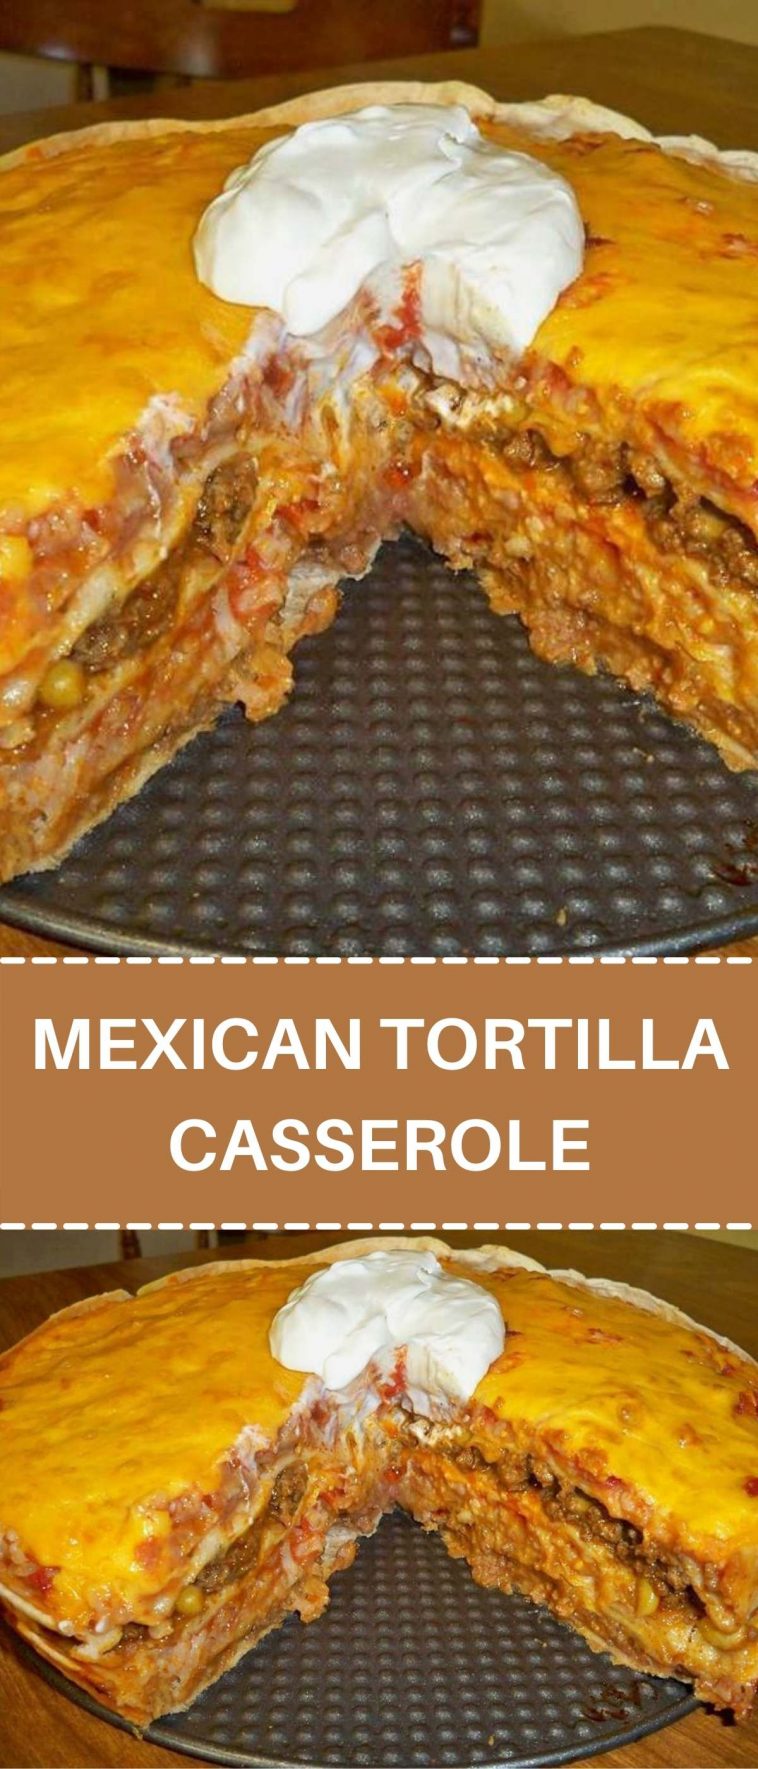 MEXICAN TORTILLA CASSEROLE